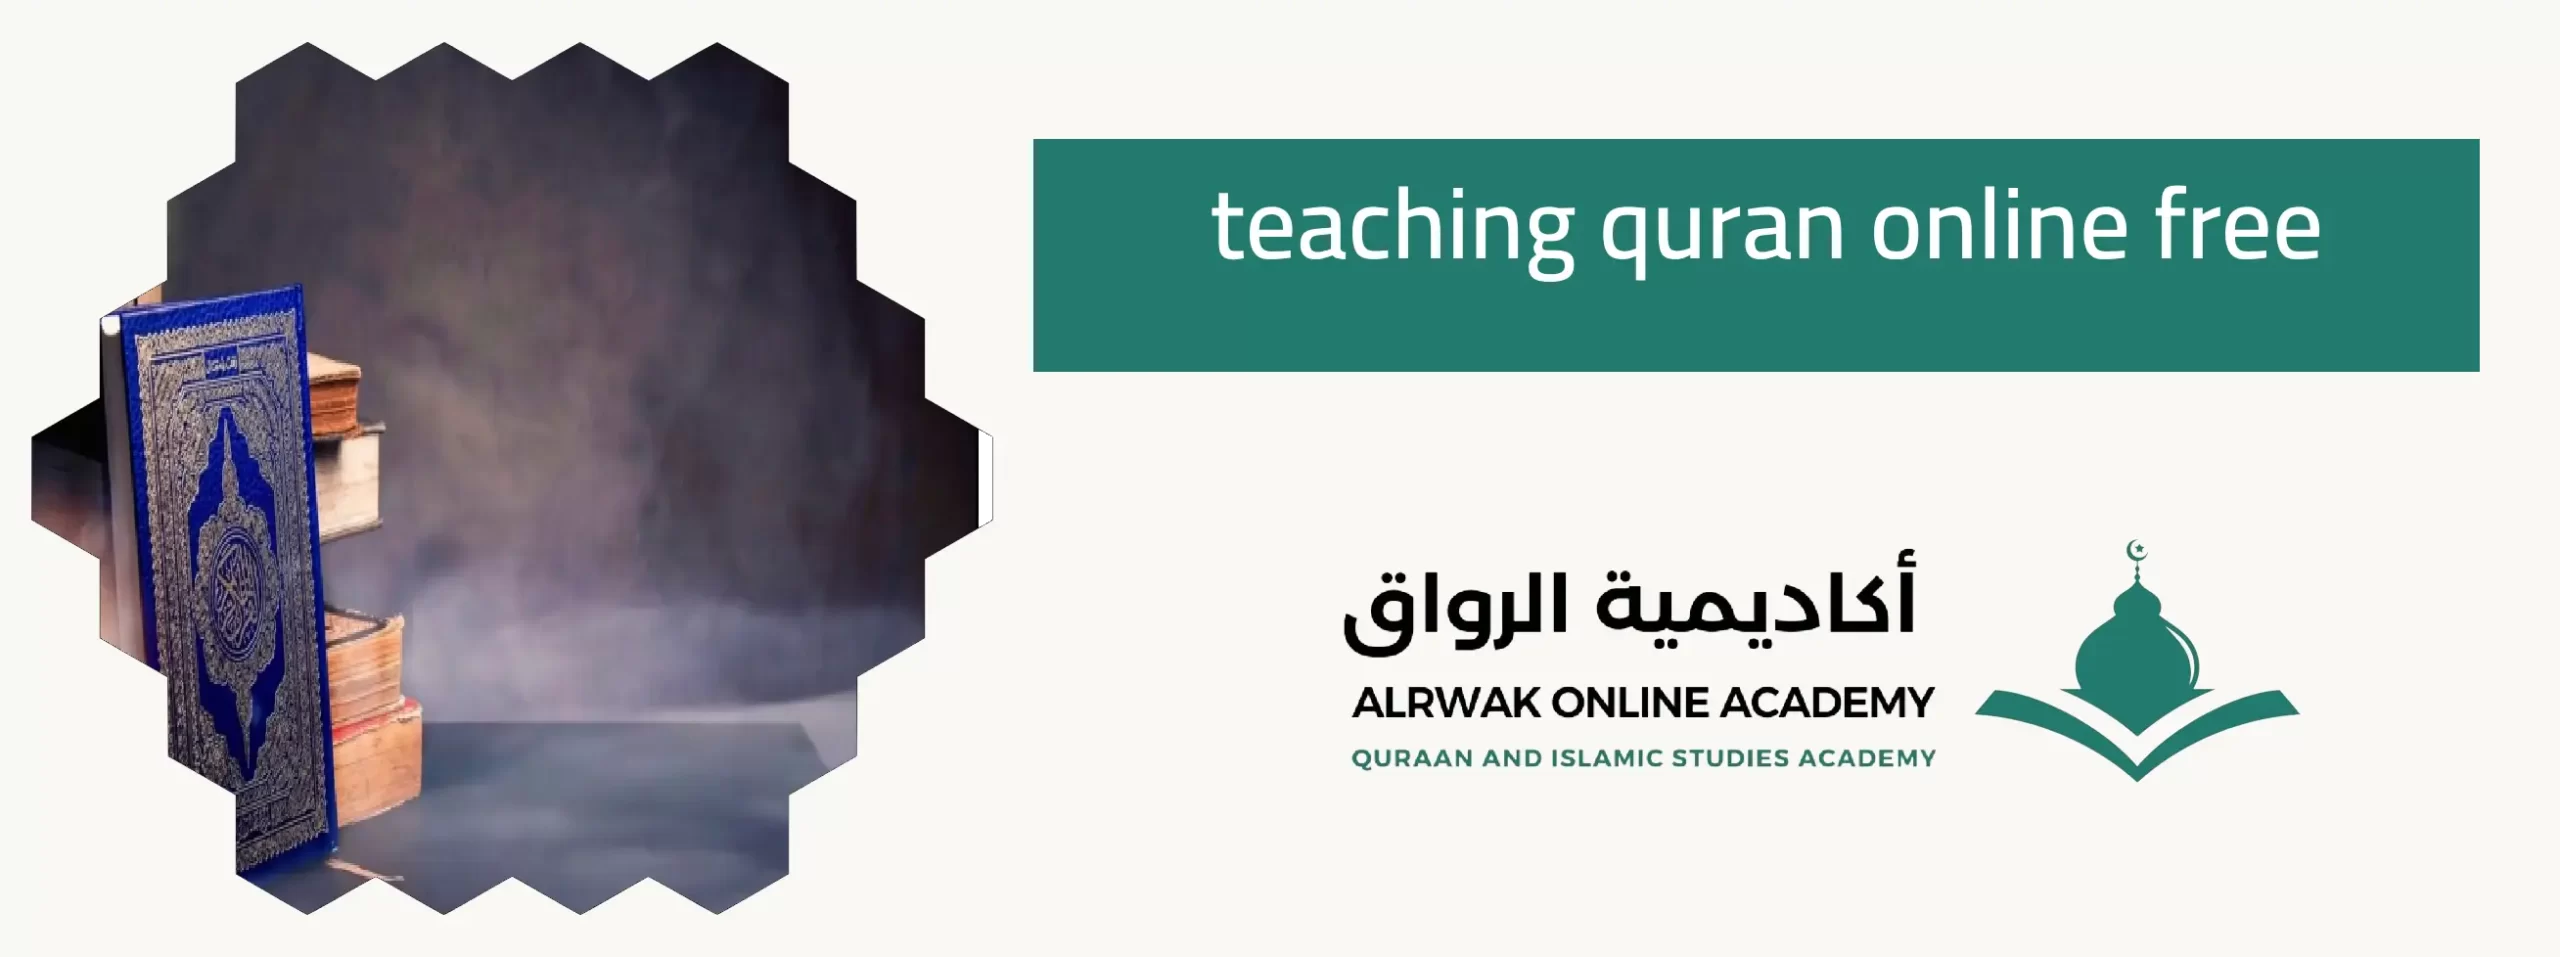 teaching quran online